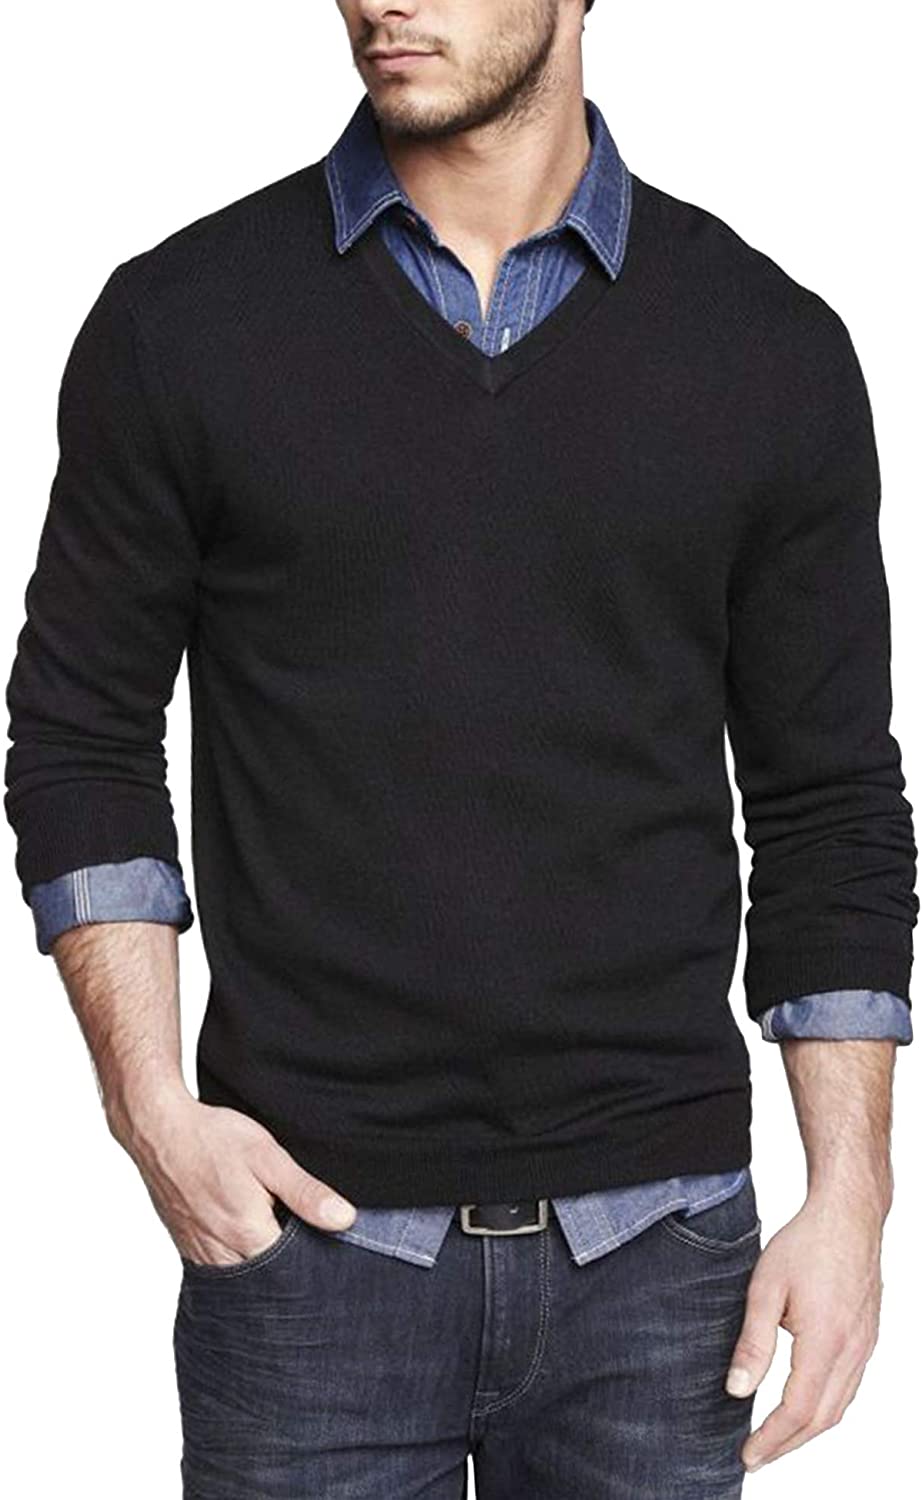 JINIDU Men's V Neck Knit Dress Sweater Casual Long Sleeve